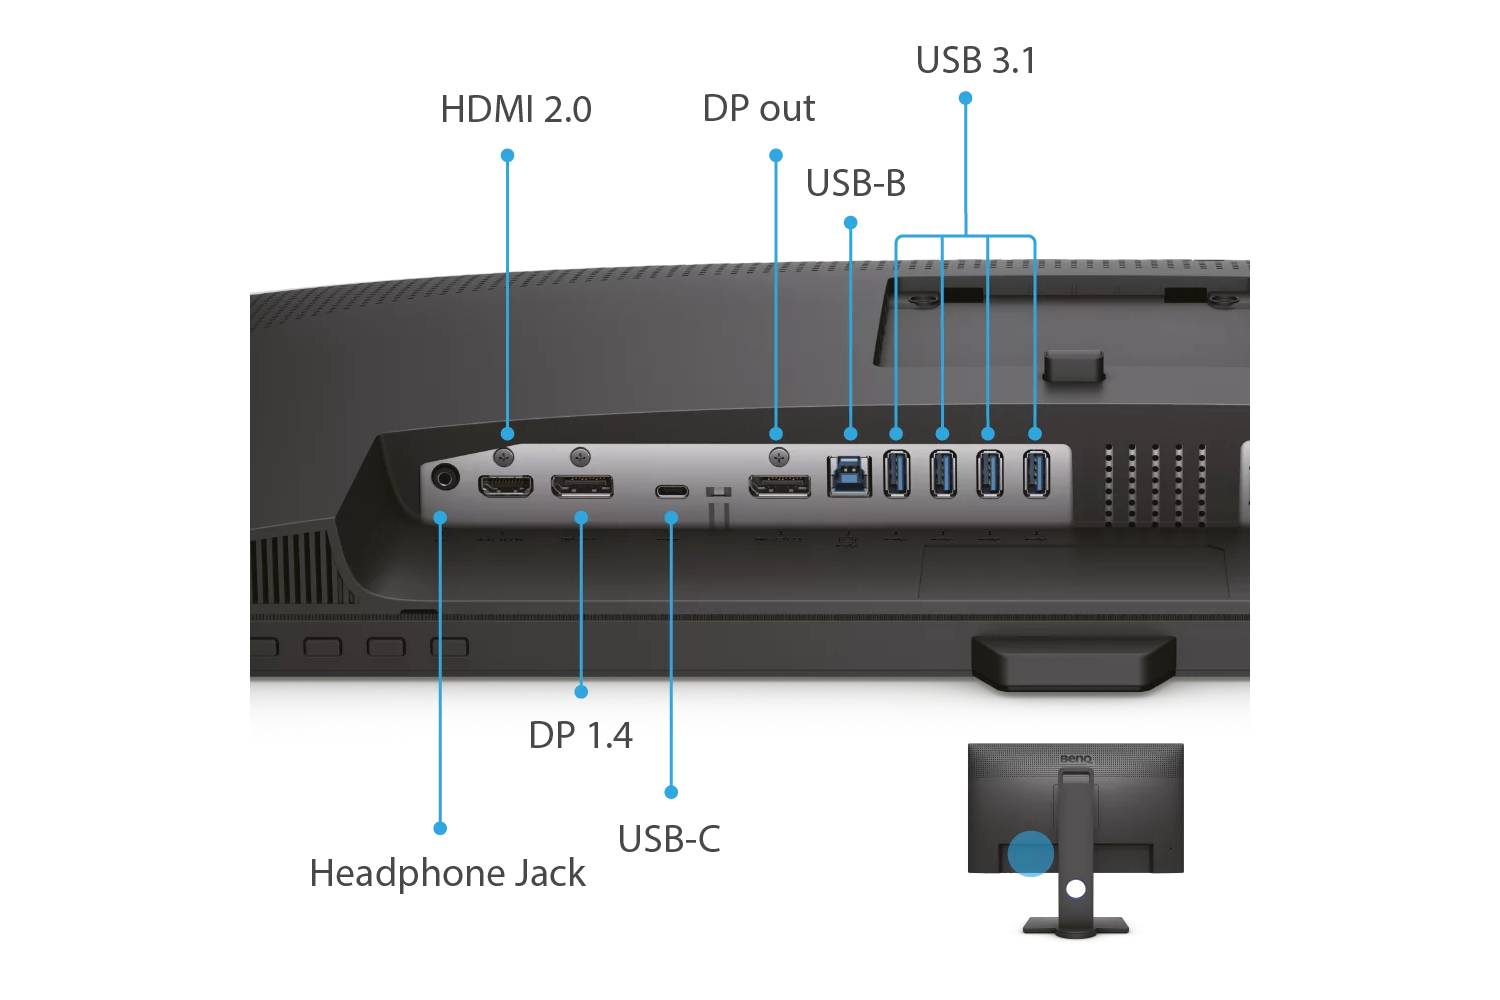 BenQ 27” 2K QHD Monitor, Commercial/Graphics Design, Video Editing | PD2705Q-Monitor-BenQ-computerspace